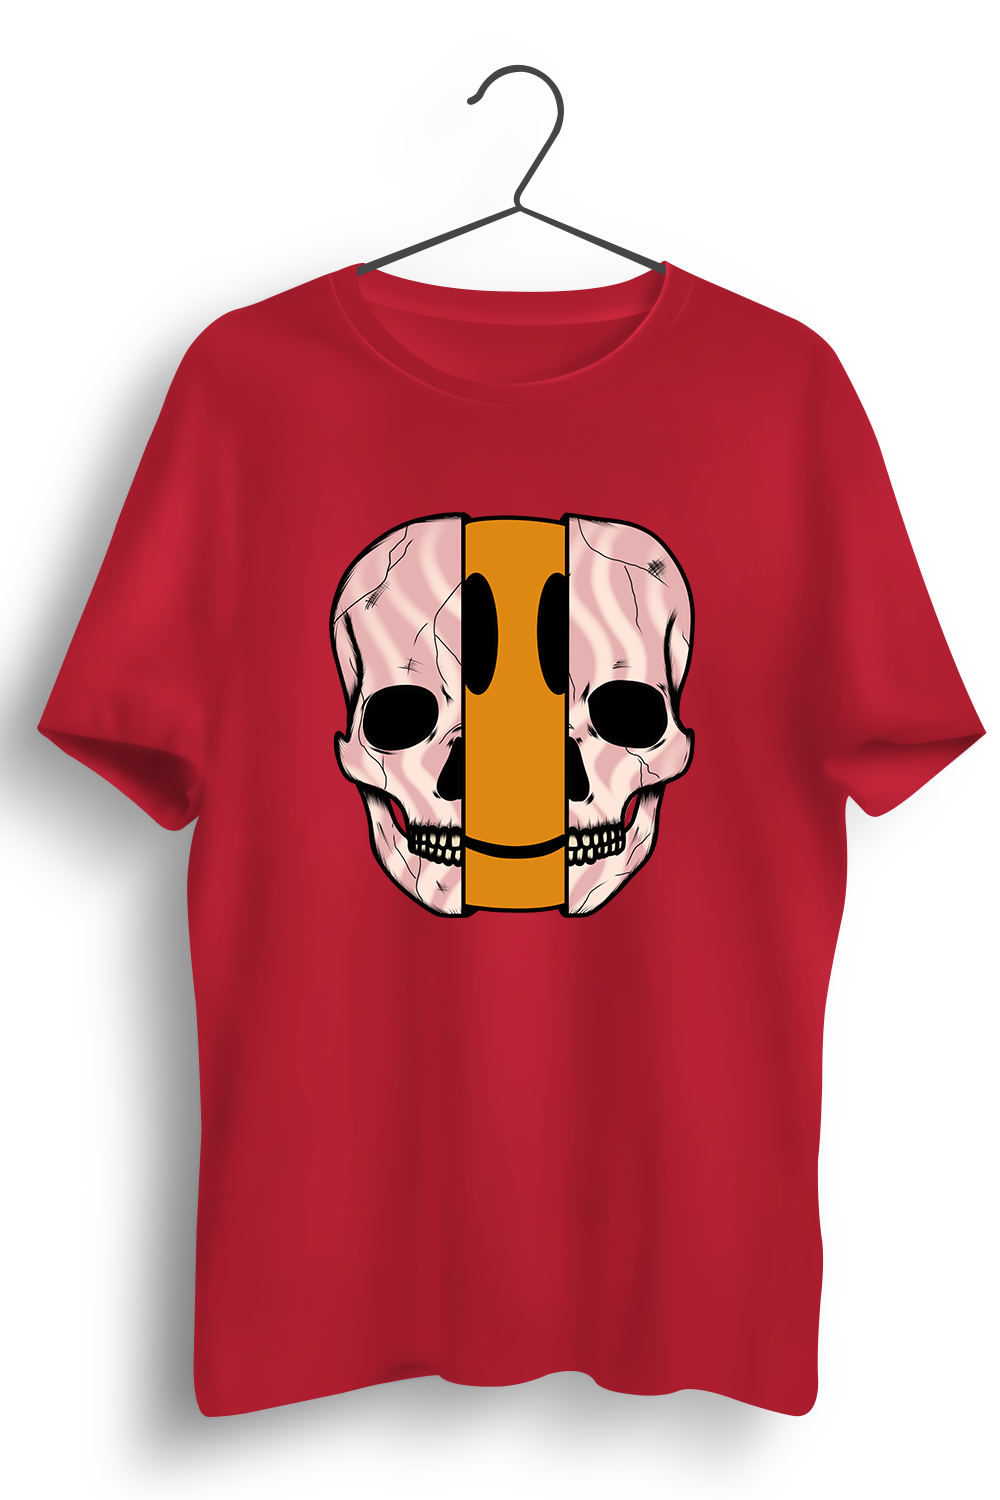 Dis Skull Graphic Printed Red Tshirt